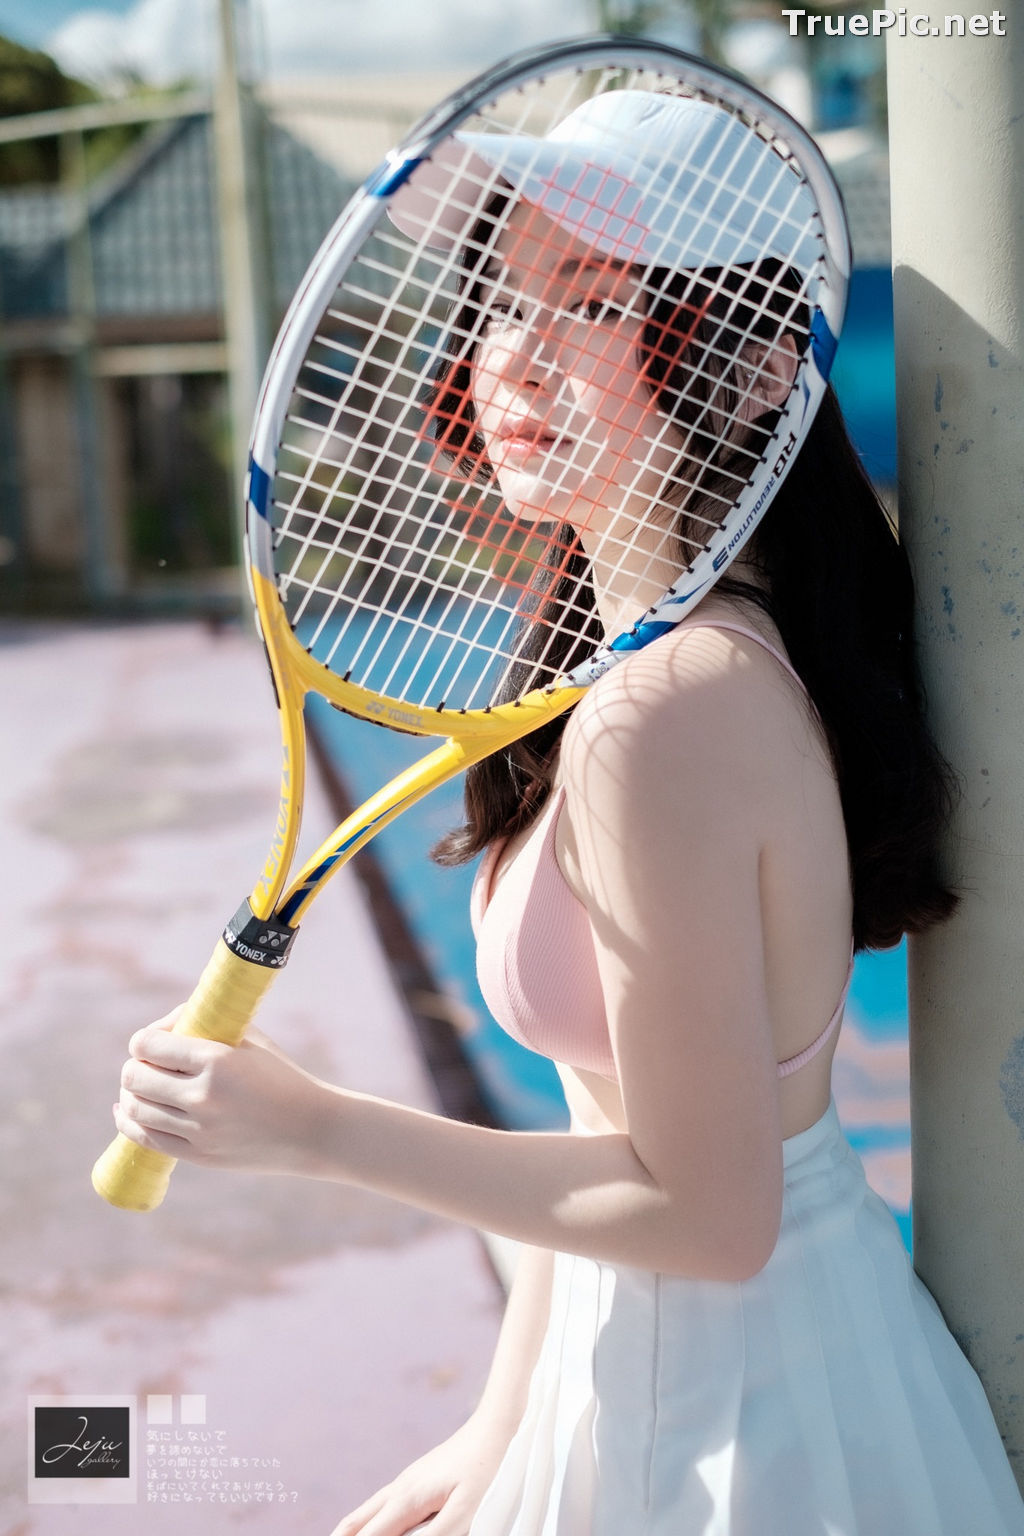 Image Thailand Model - Sarutaya Tawechaisupaphong - Hot Girl Tennis - TruePic.net - Picture-12